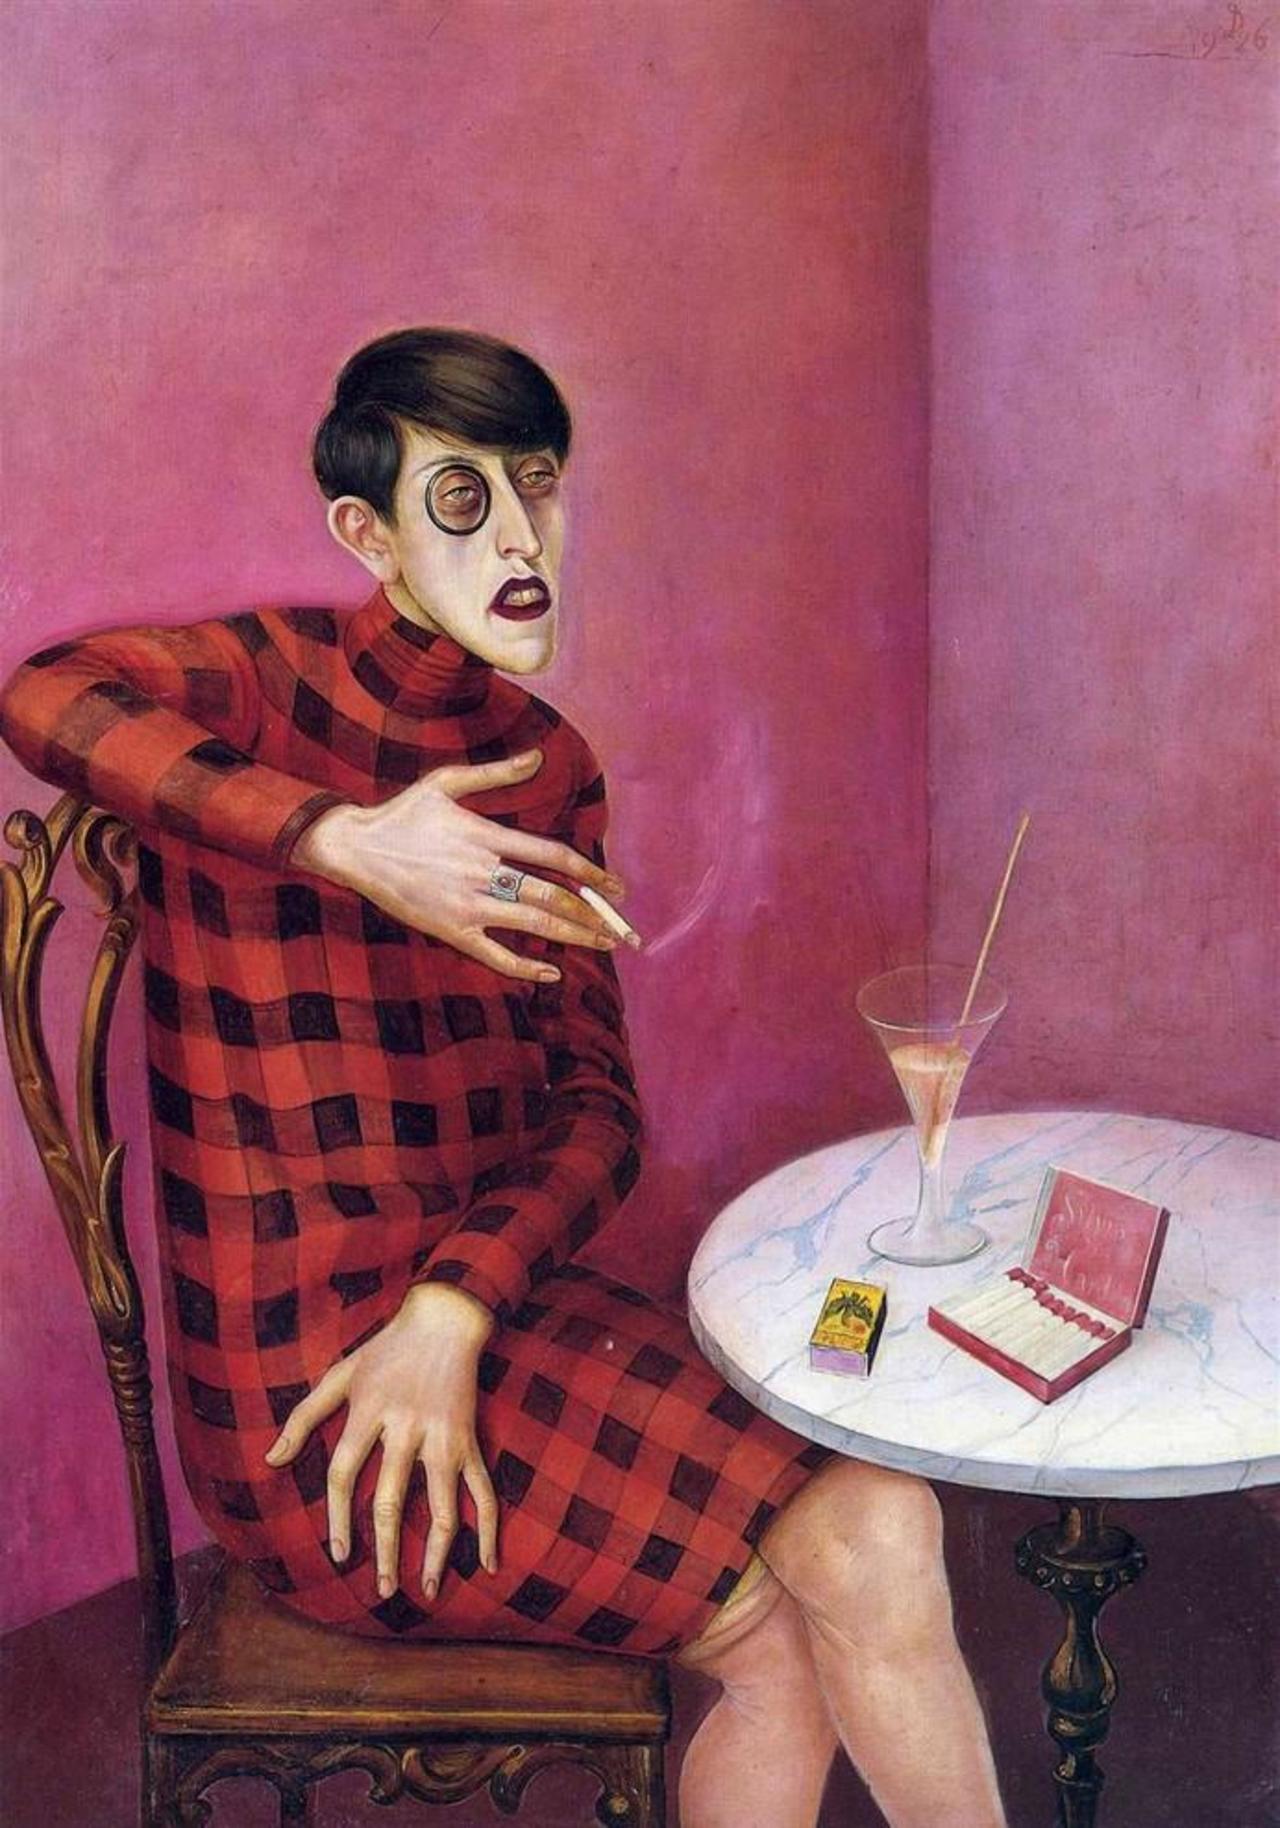 Otto Dix #Art #Paintings #German #Expressionism #Verism #Dada #Cubism http://t.co/kT62JKuYdd